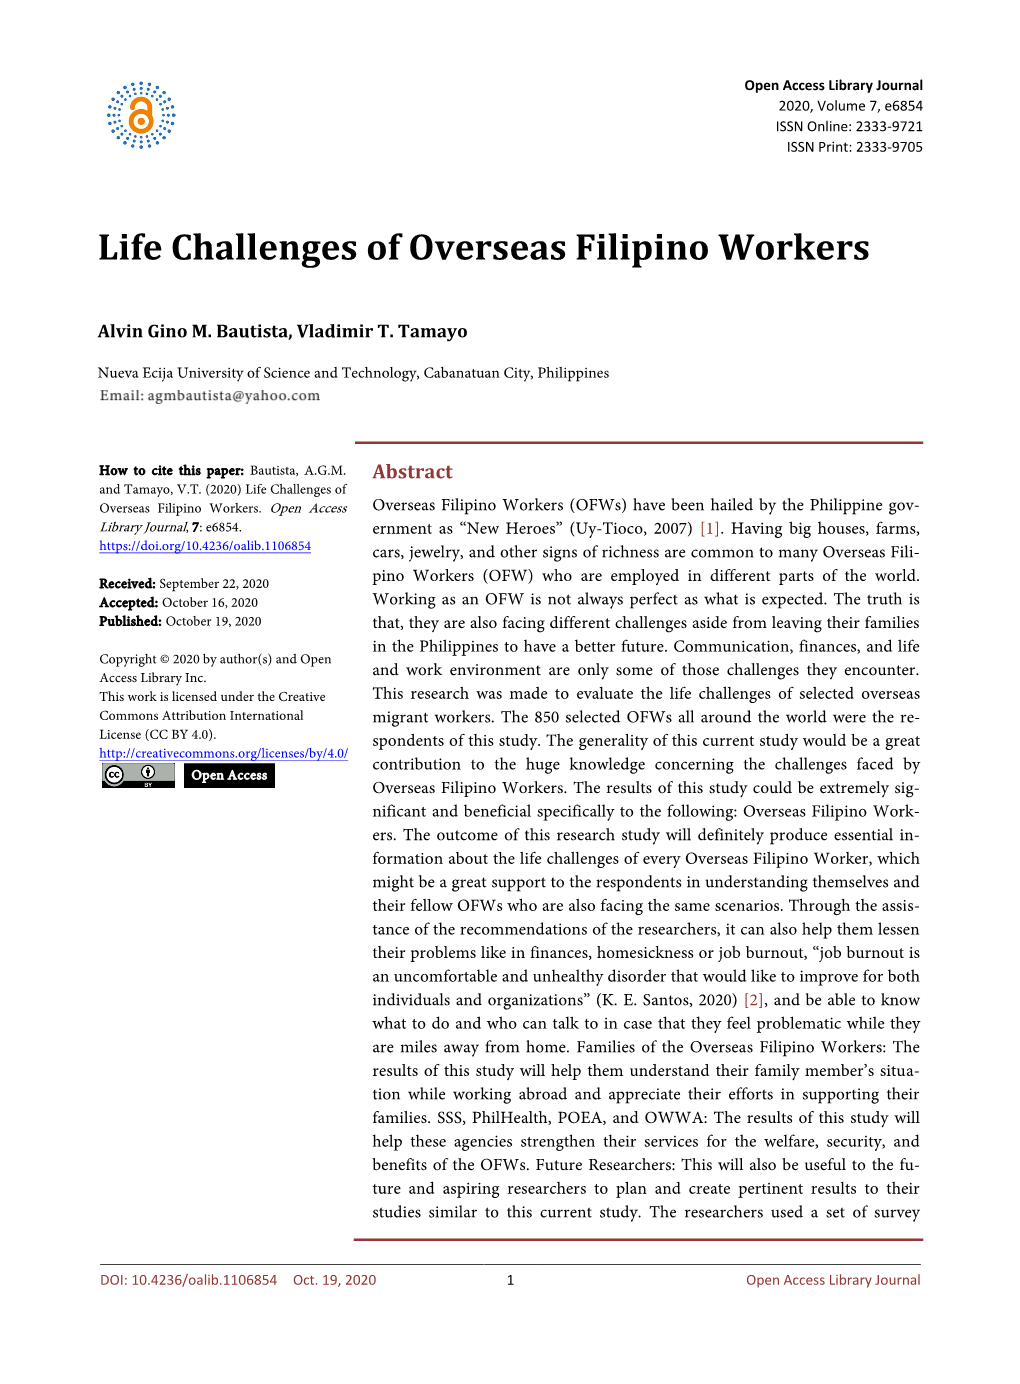 Life Challenges of Overseas Filipino Workers